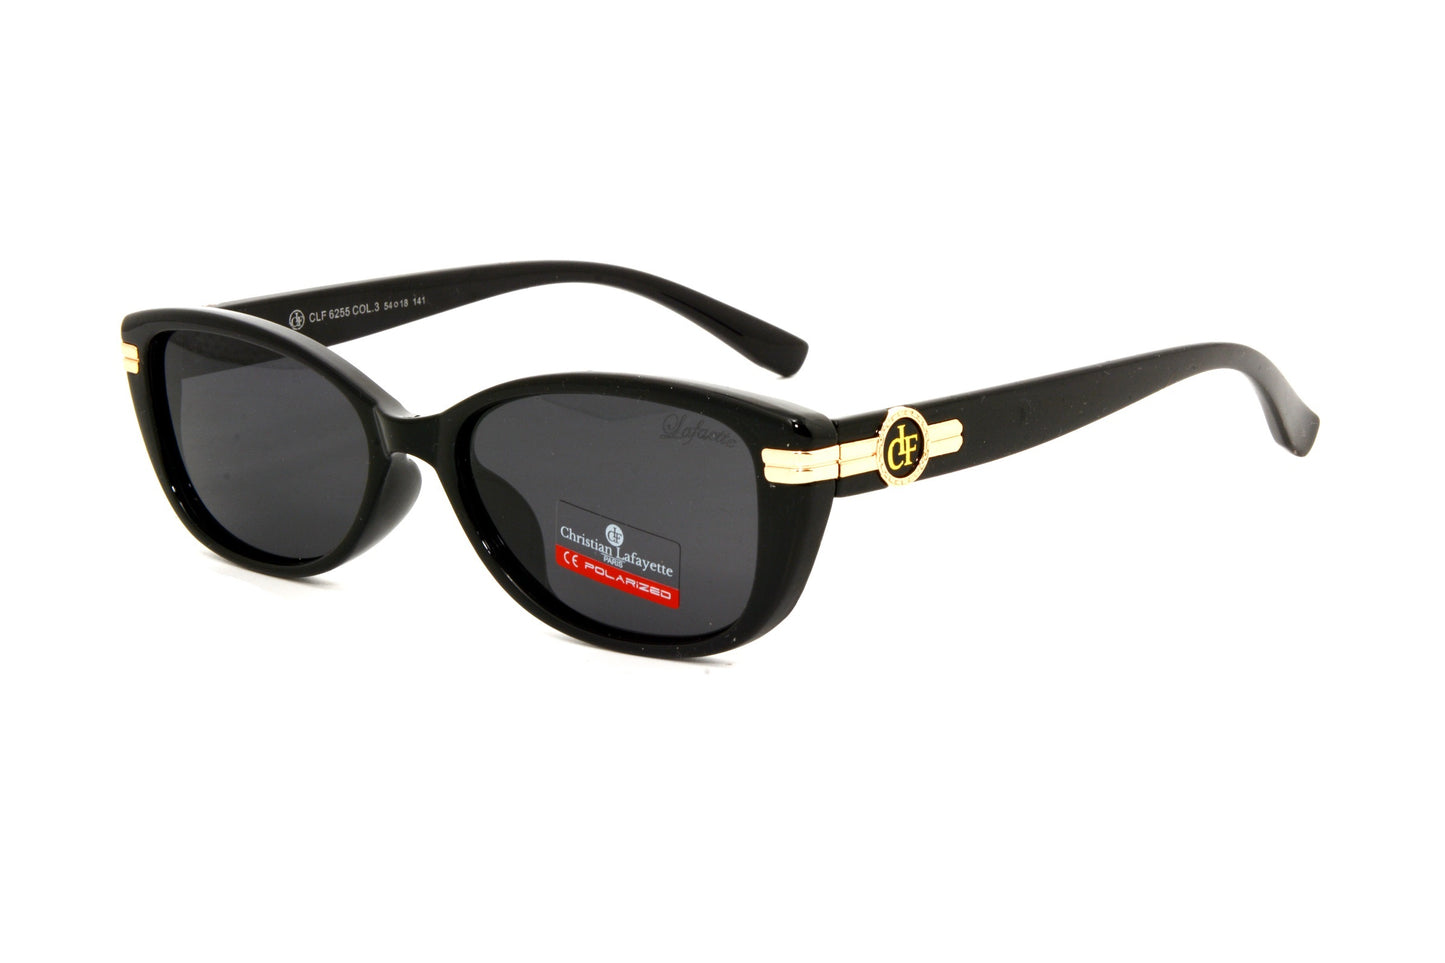 Christian Lafayette sunglasses Clf 6255 C3